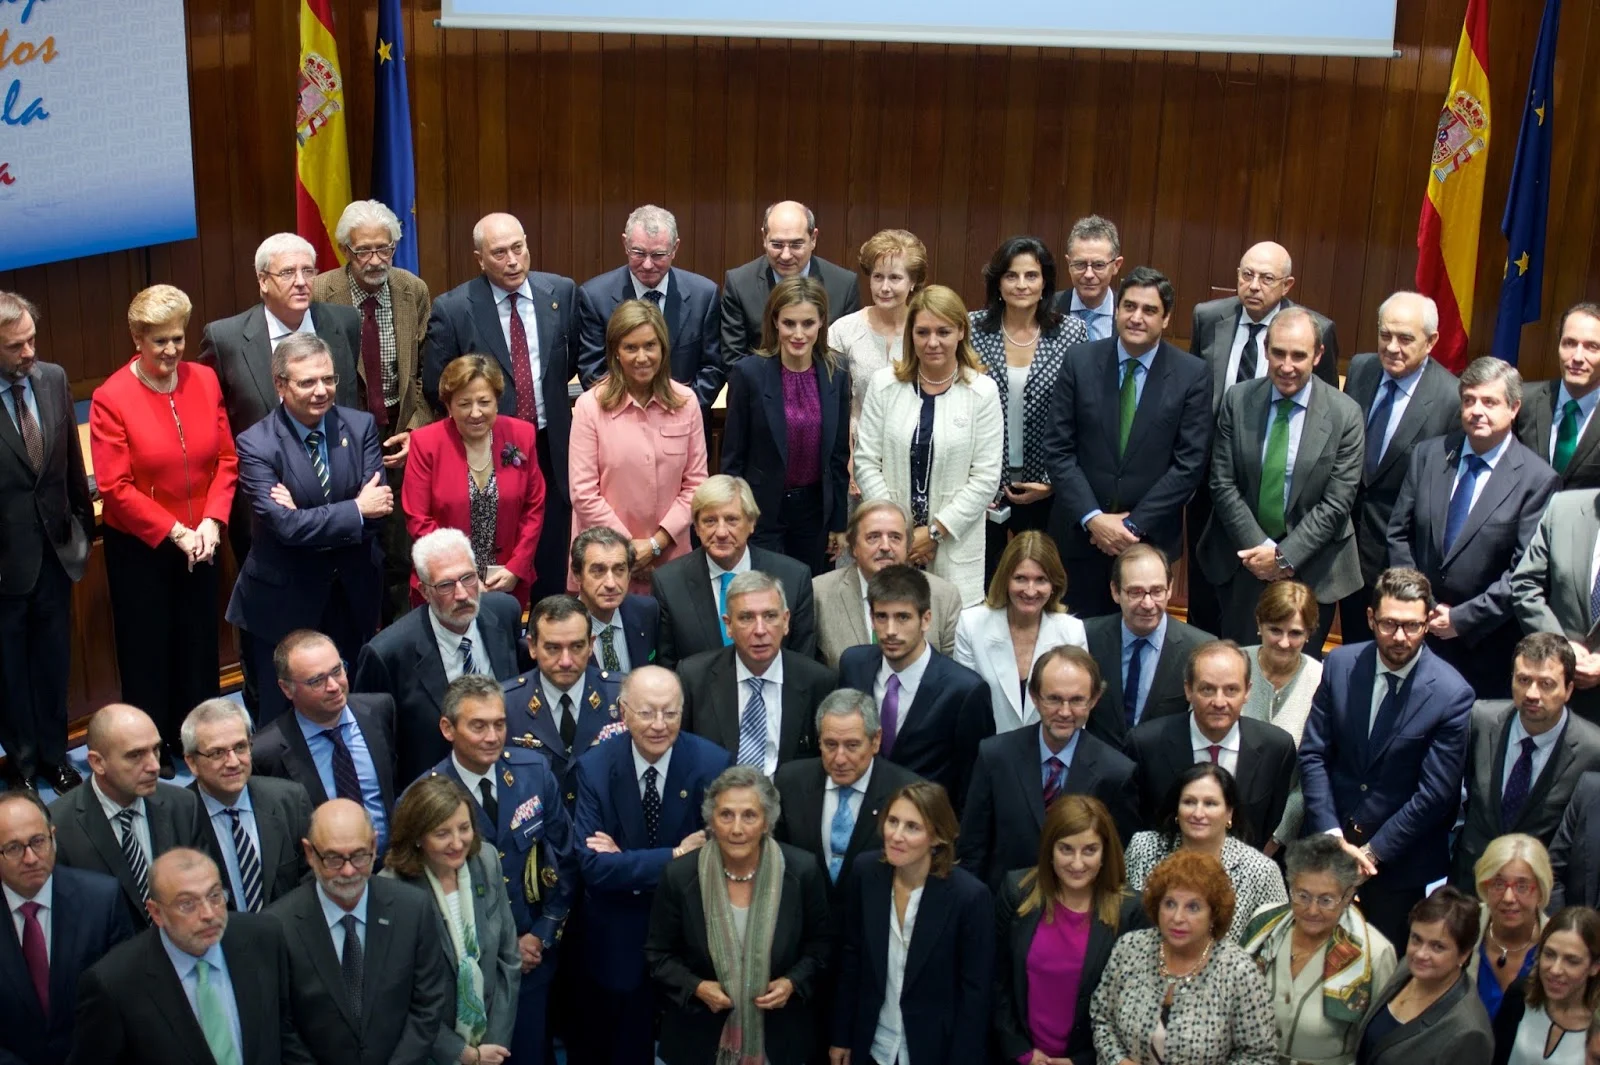 25th Anniversary Ceremony of the Spanish National Transplant